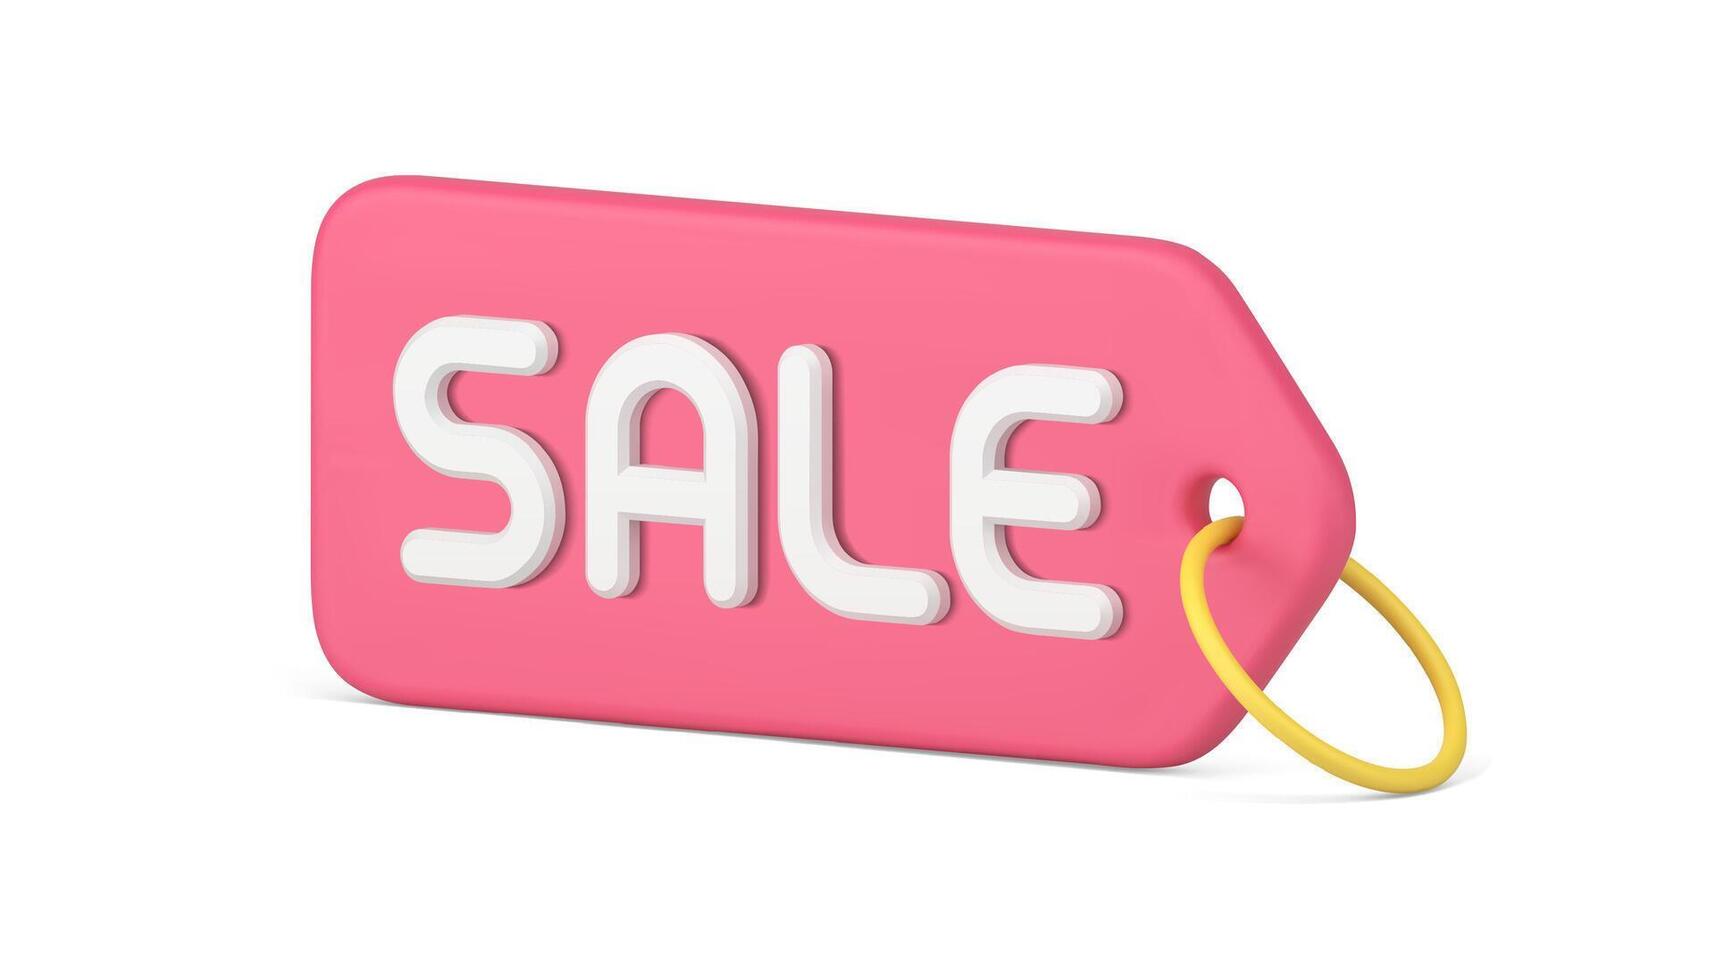 Rosa venda tag corda loja marketing especial oferta preço fora varejo Projeto realista 3d ícone vetor